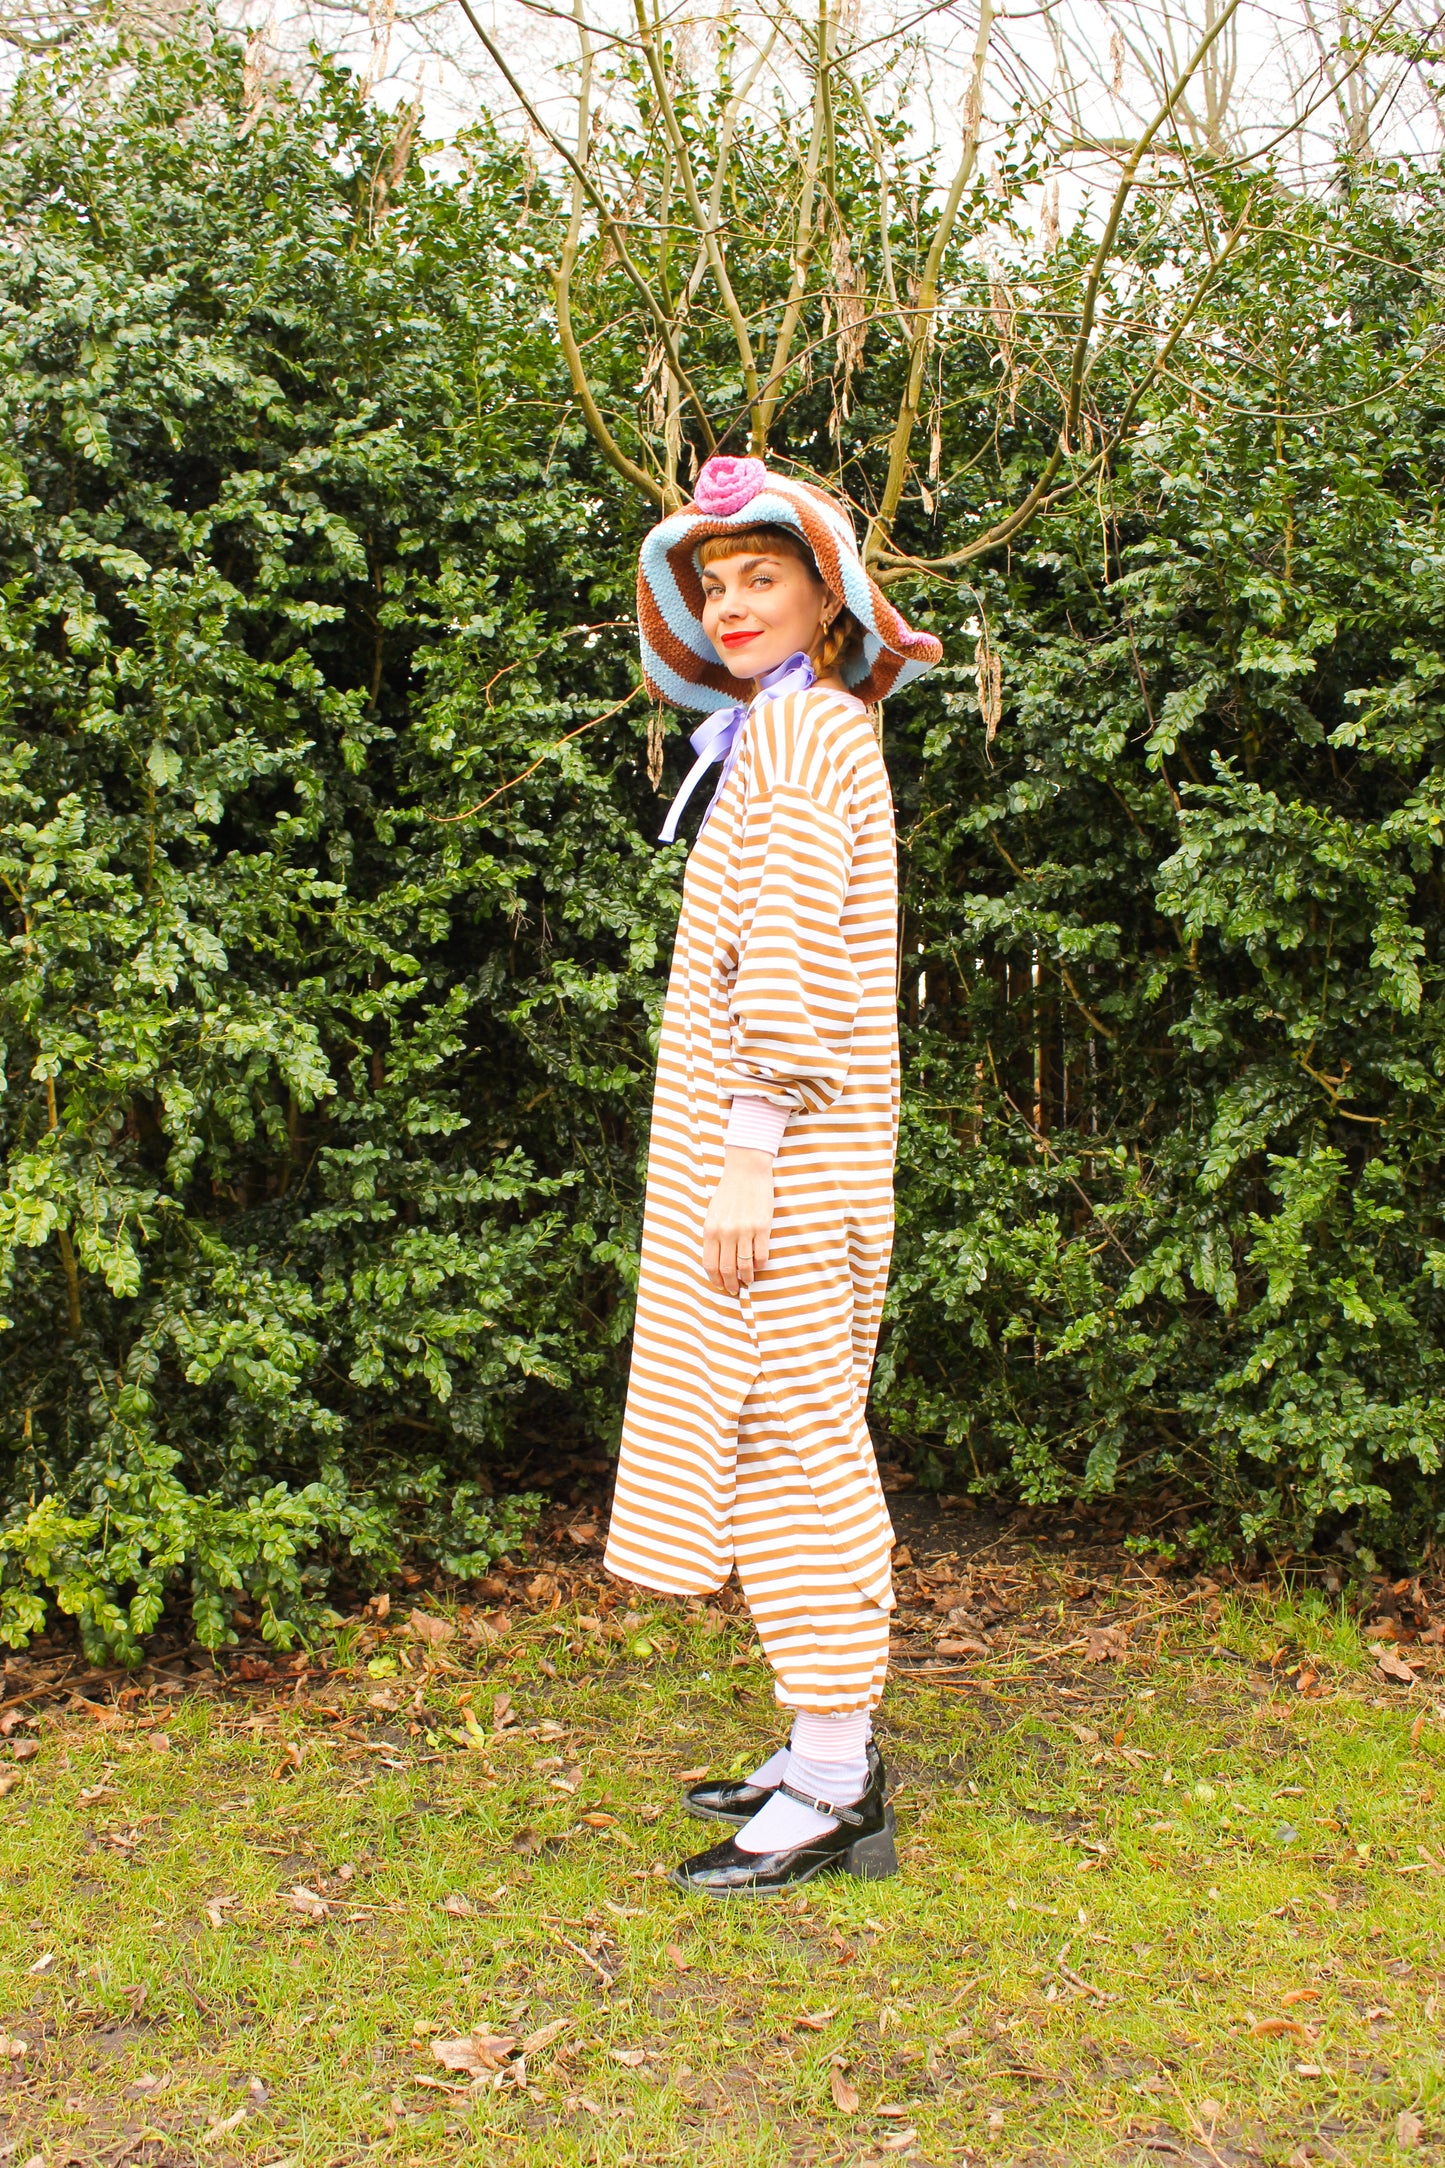 Rullegardenia Slumber Dress - Caramel Stripes